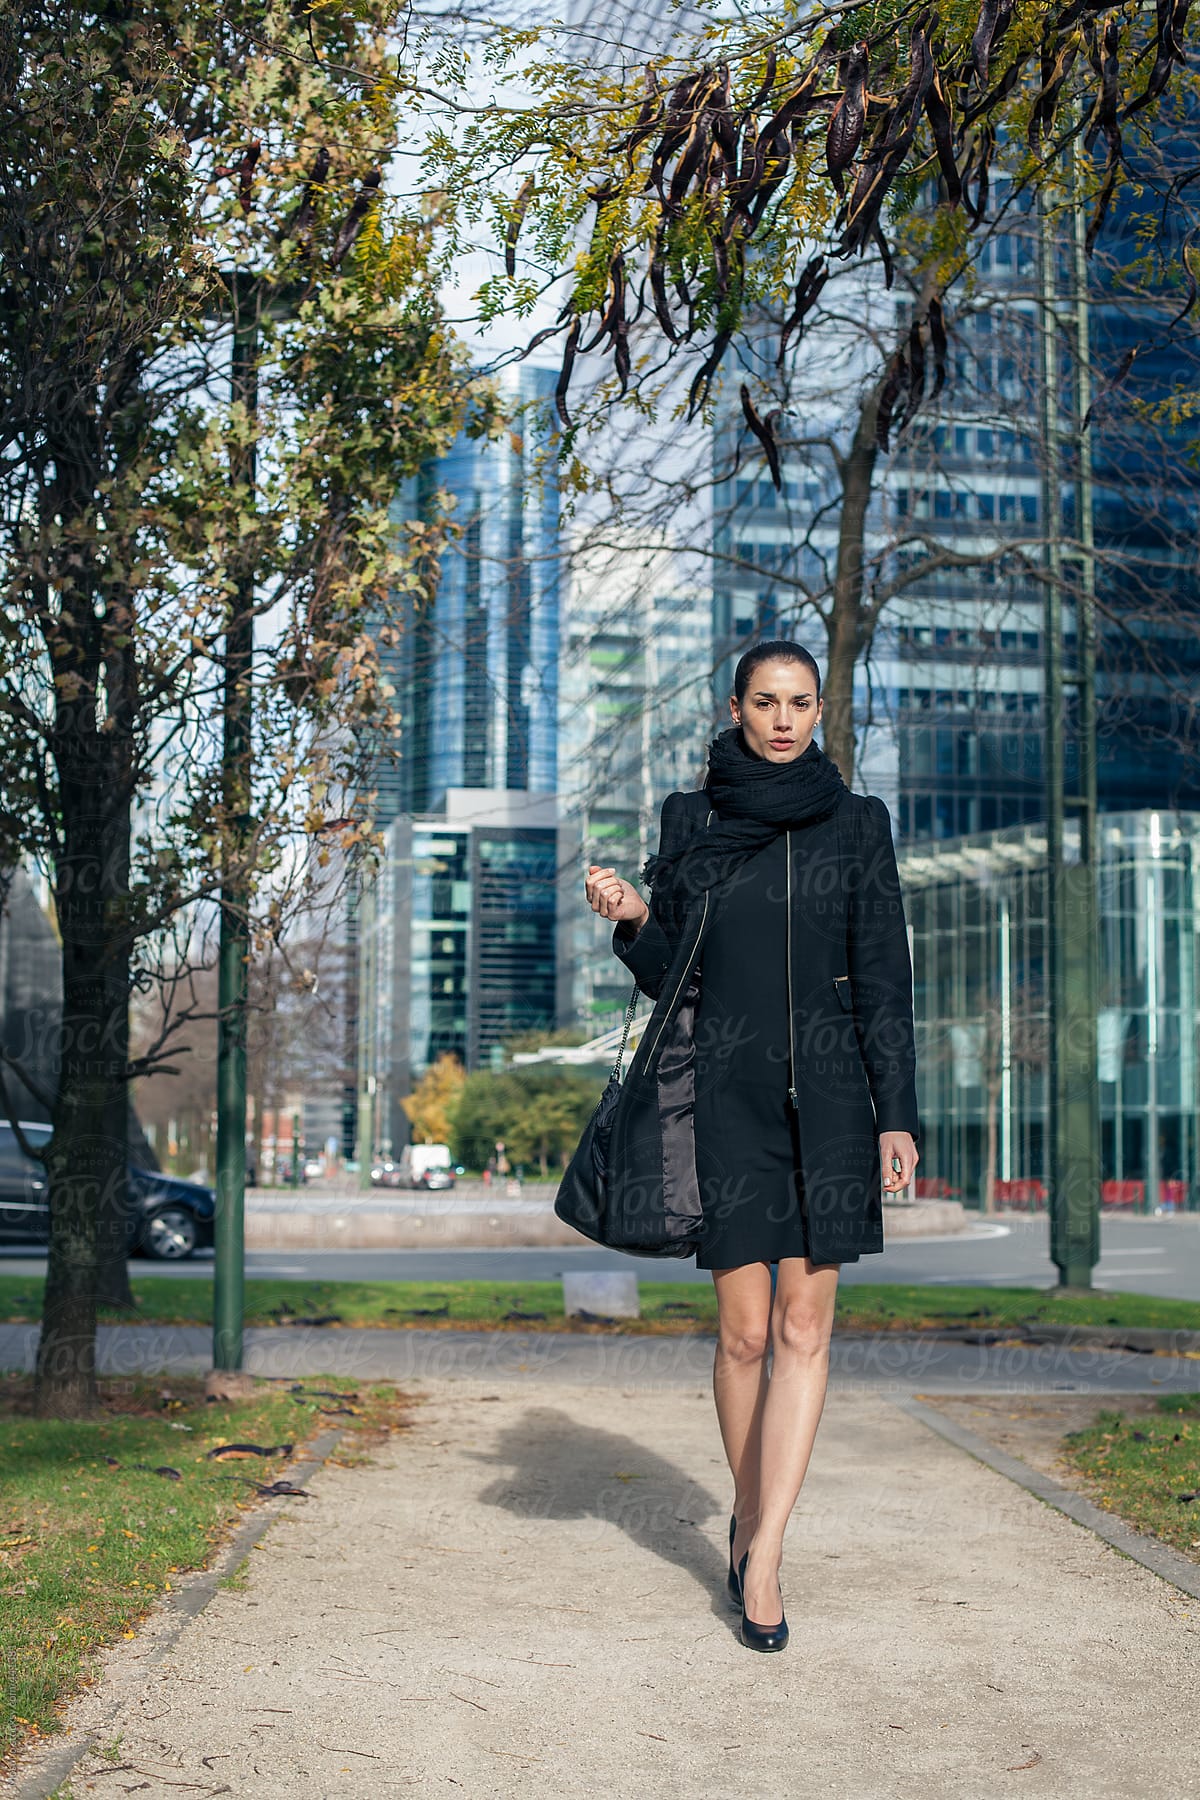 Elegant Woman Walking Down The Street by Stocksy Contributor Mosuno -  Stocksy